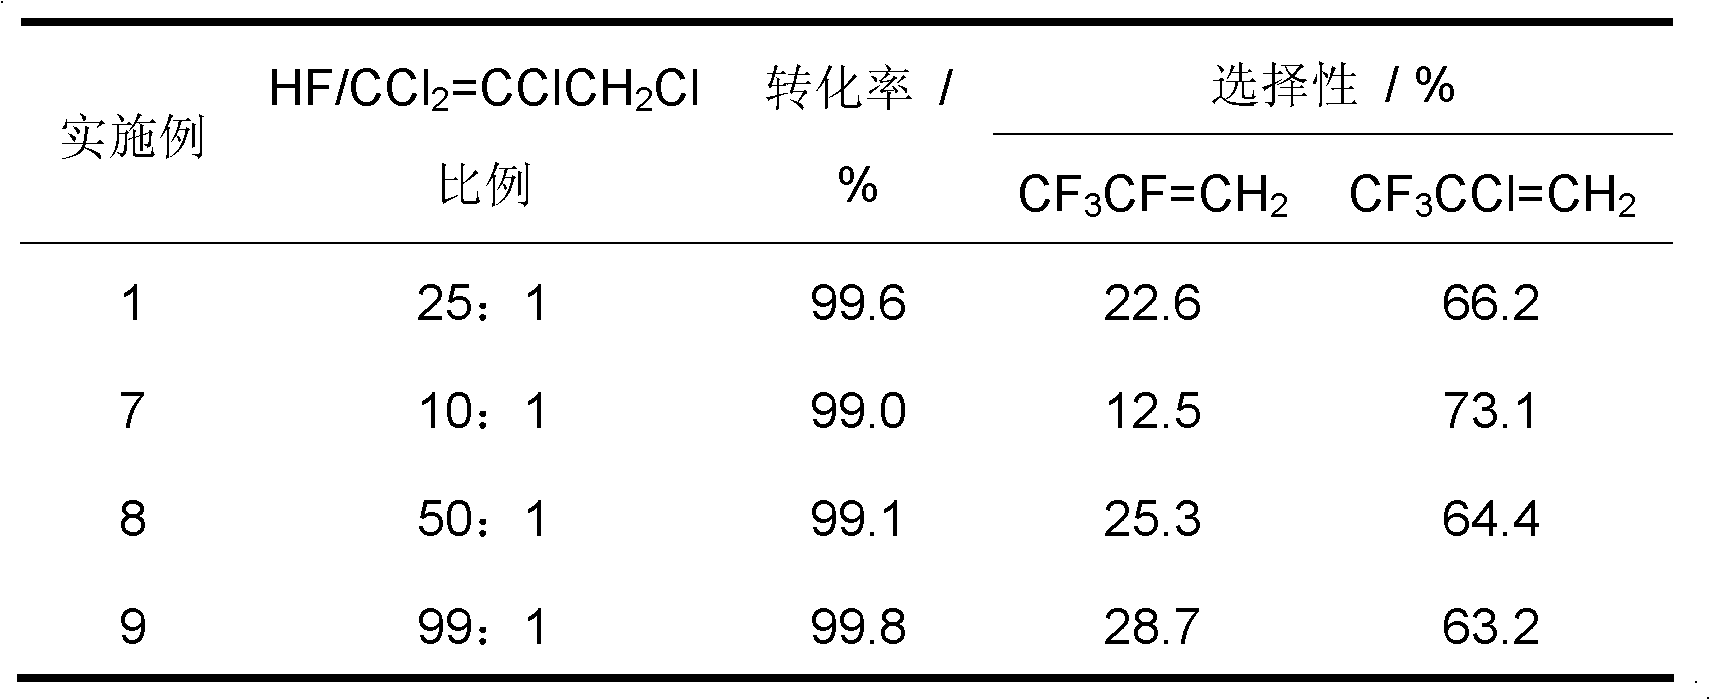 Method for preparing 2,3,3,3-tetrafluoropropene